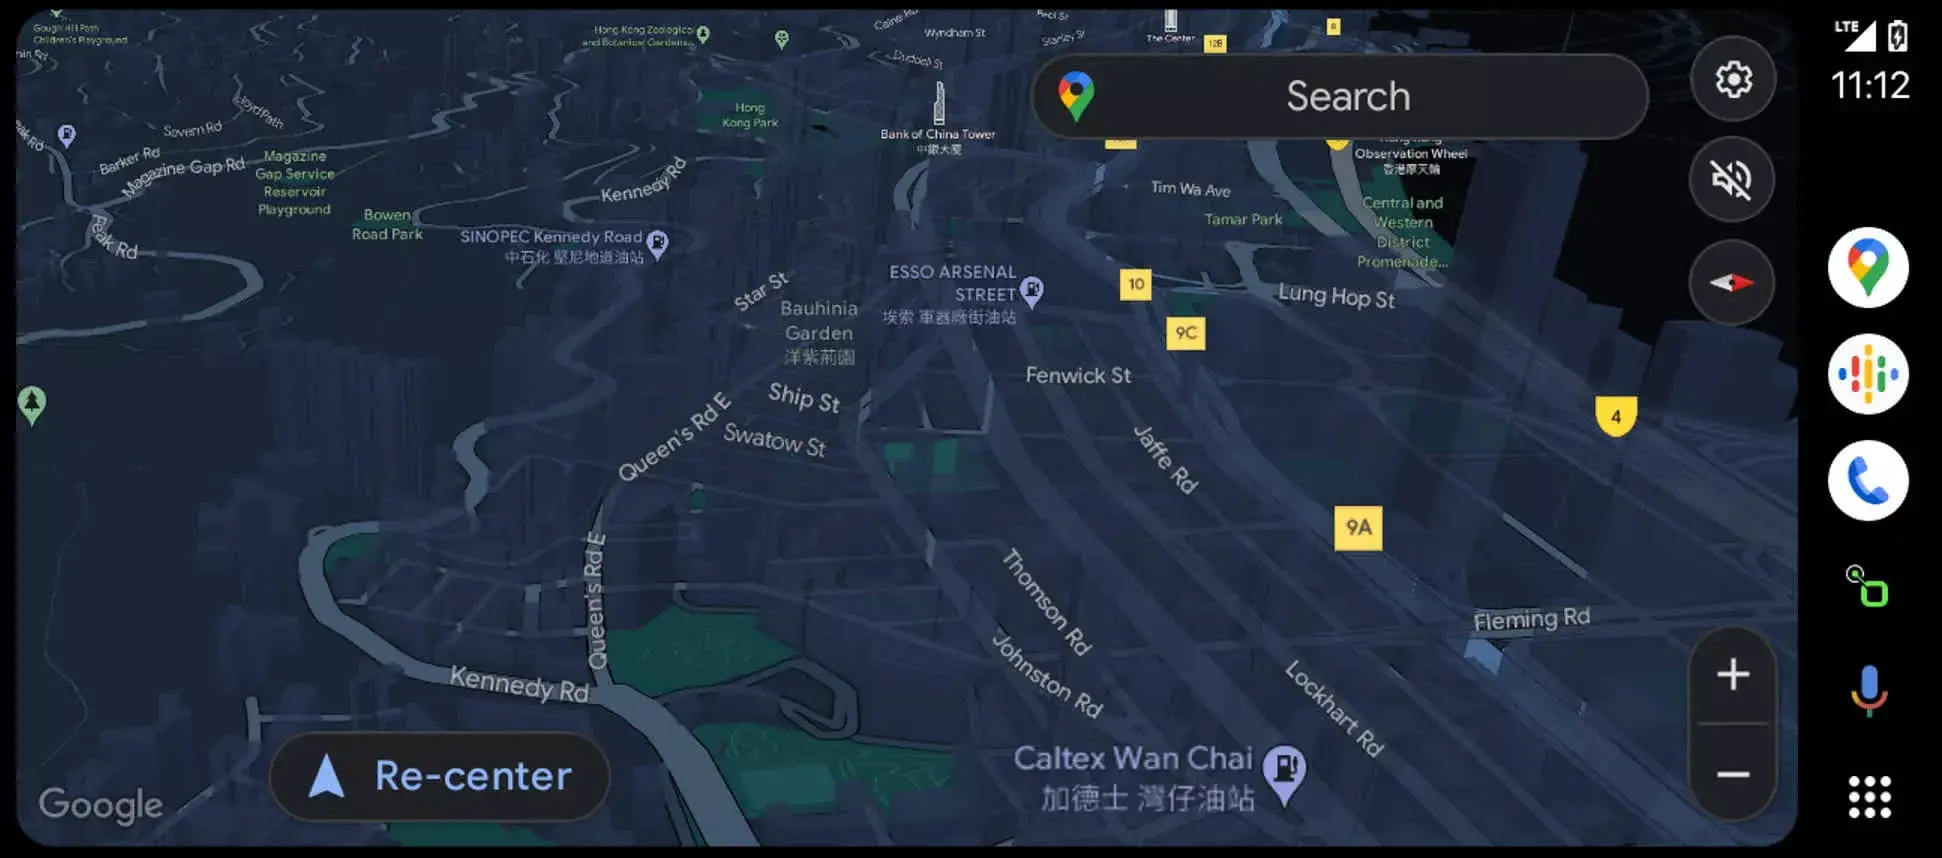 Google 지도, Android Auto 및 Apple CarPlay에서 3D 건물 보기 기능 추가 | mbong.kr 엠봉